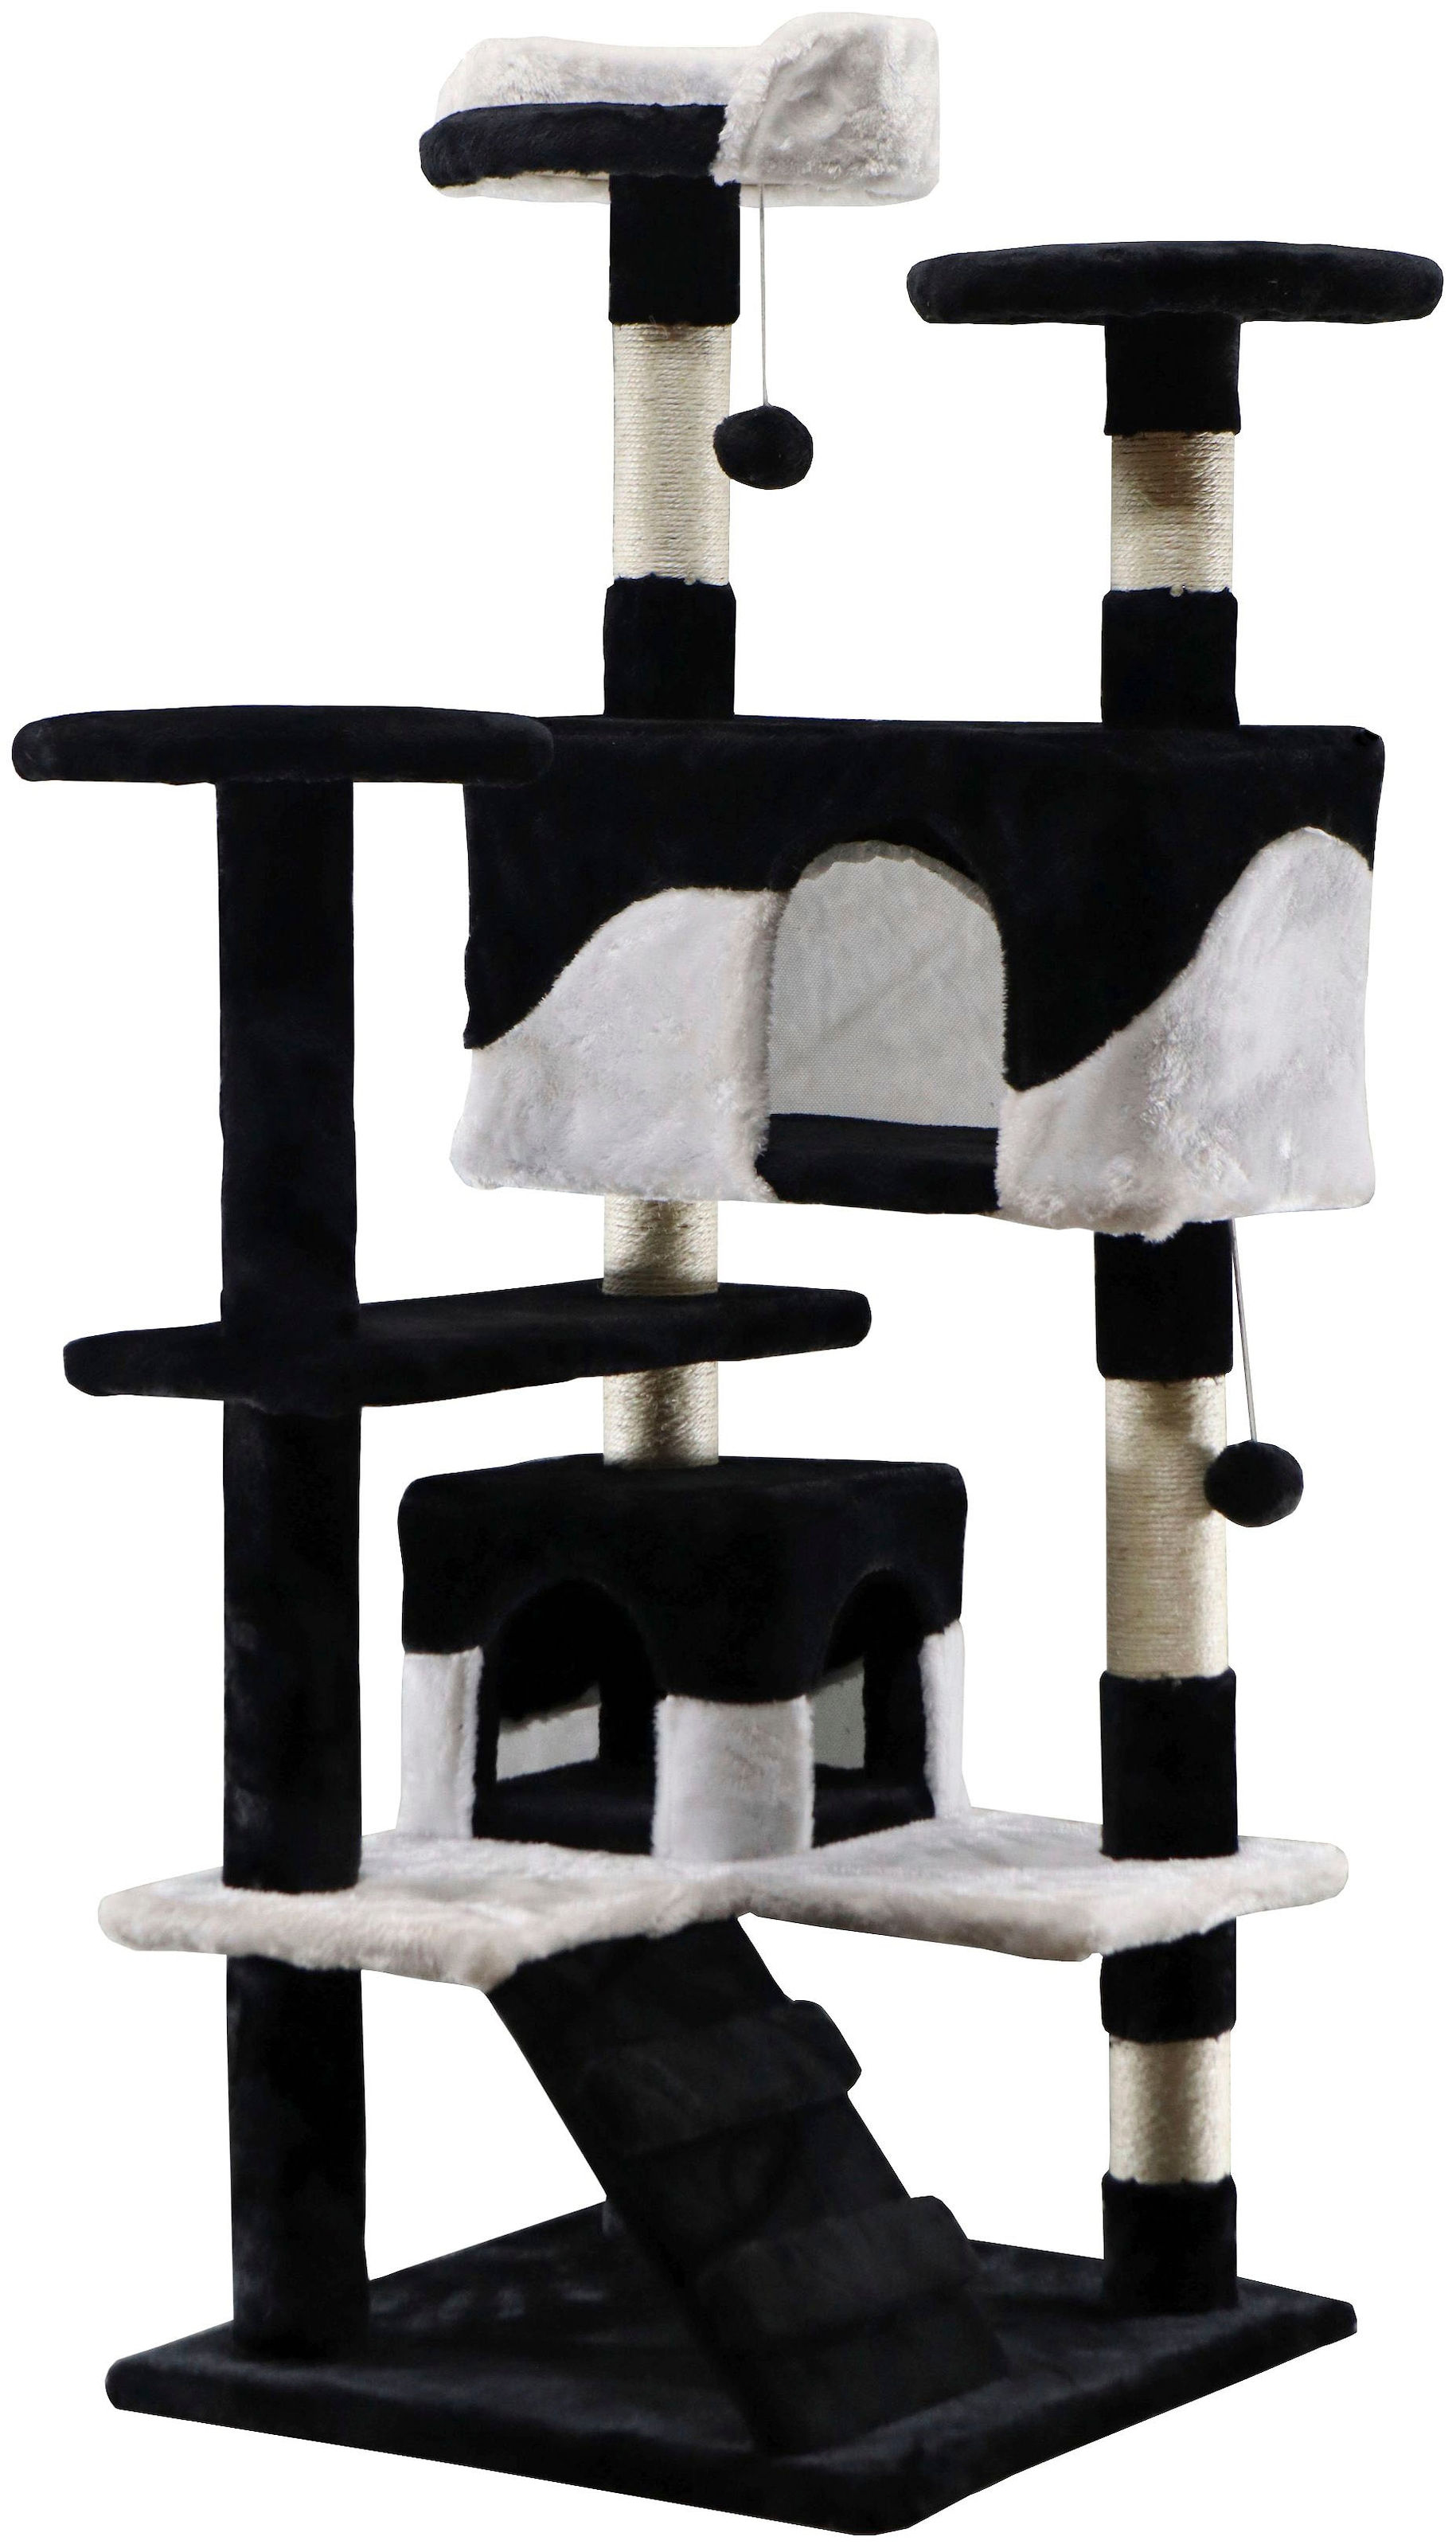 ABUKI Kratzbaum »Feli«, hoch, BxTxH: 56x56x130 cm, inkl. 4m Rolle Sisal